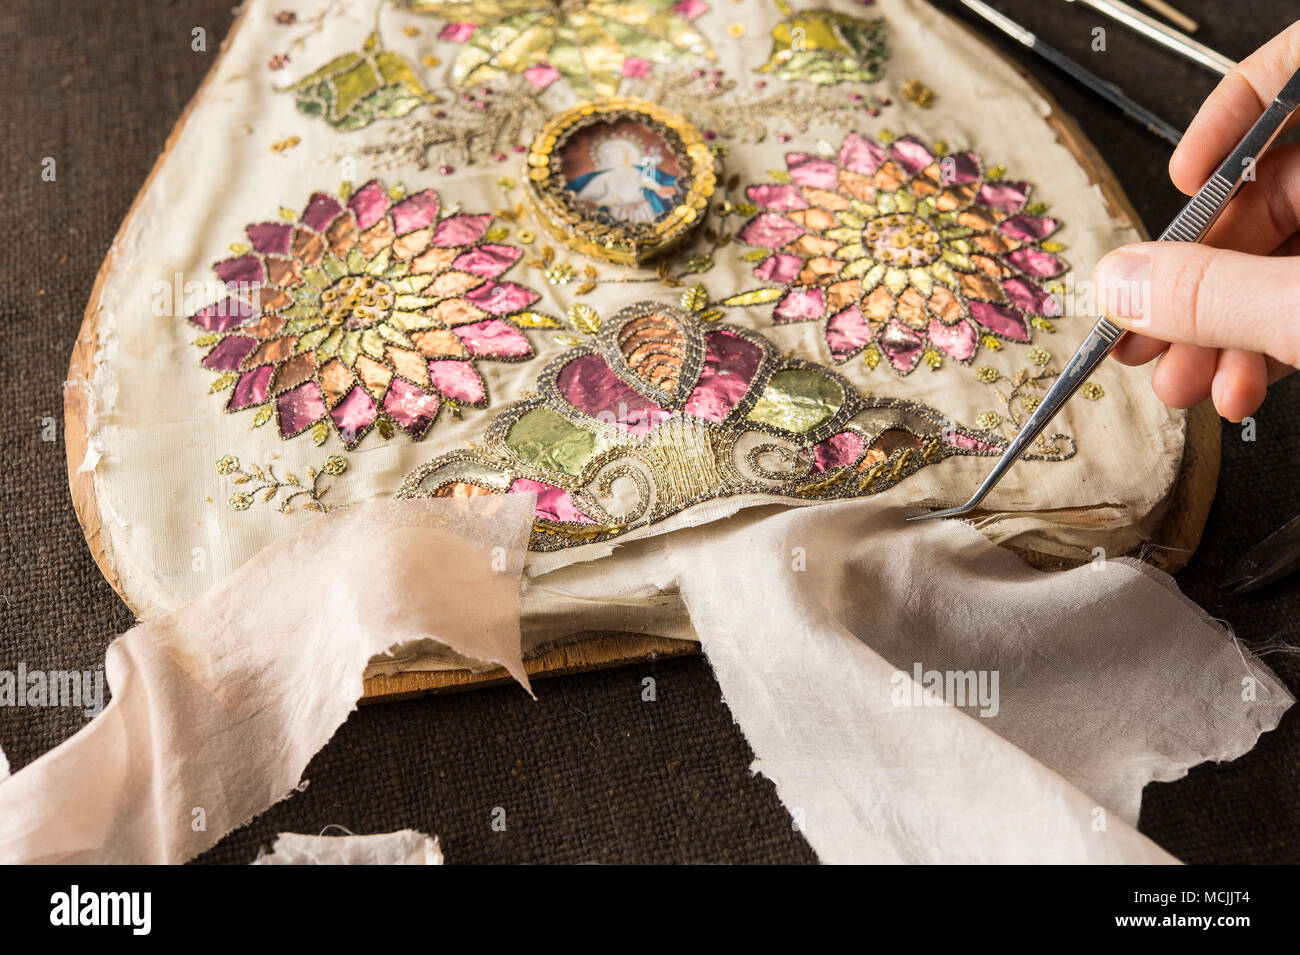 https://c8.alamy.com/comp/MCJJT4/restoration-studio-restorer-hand-holds-fabric-samples-with-tweezers-on-torn-artfully-embroidered-silk-cloth-munich-bavaria-MCJJT4.jpg